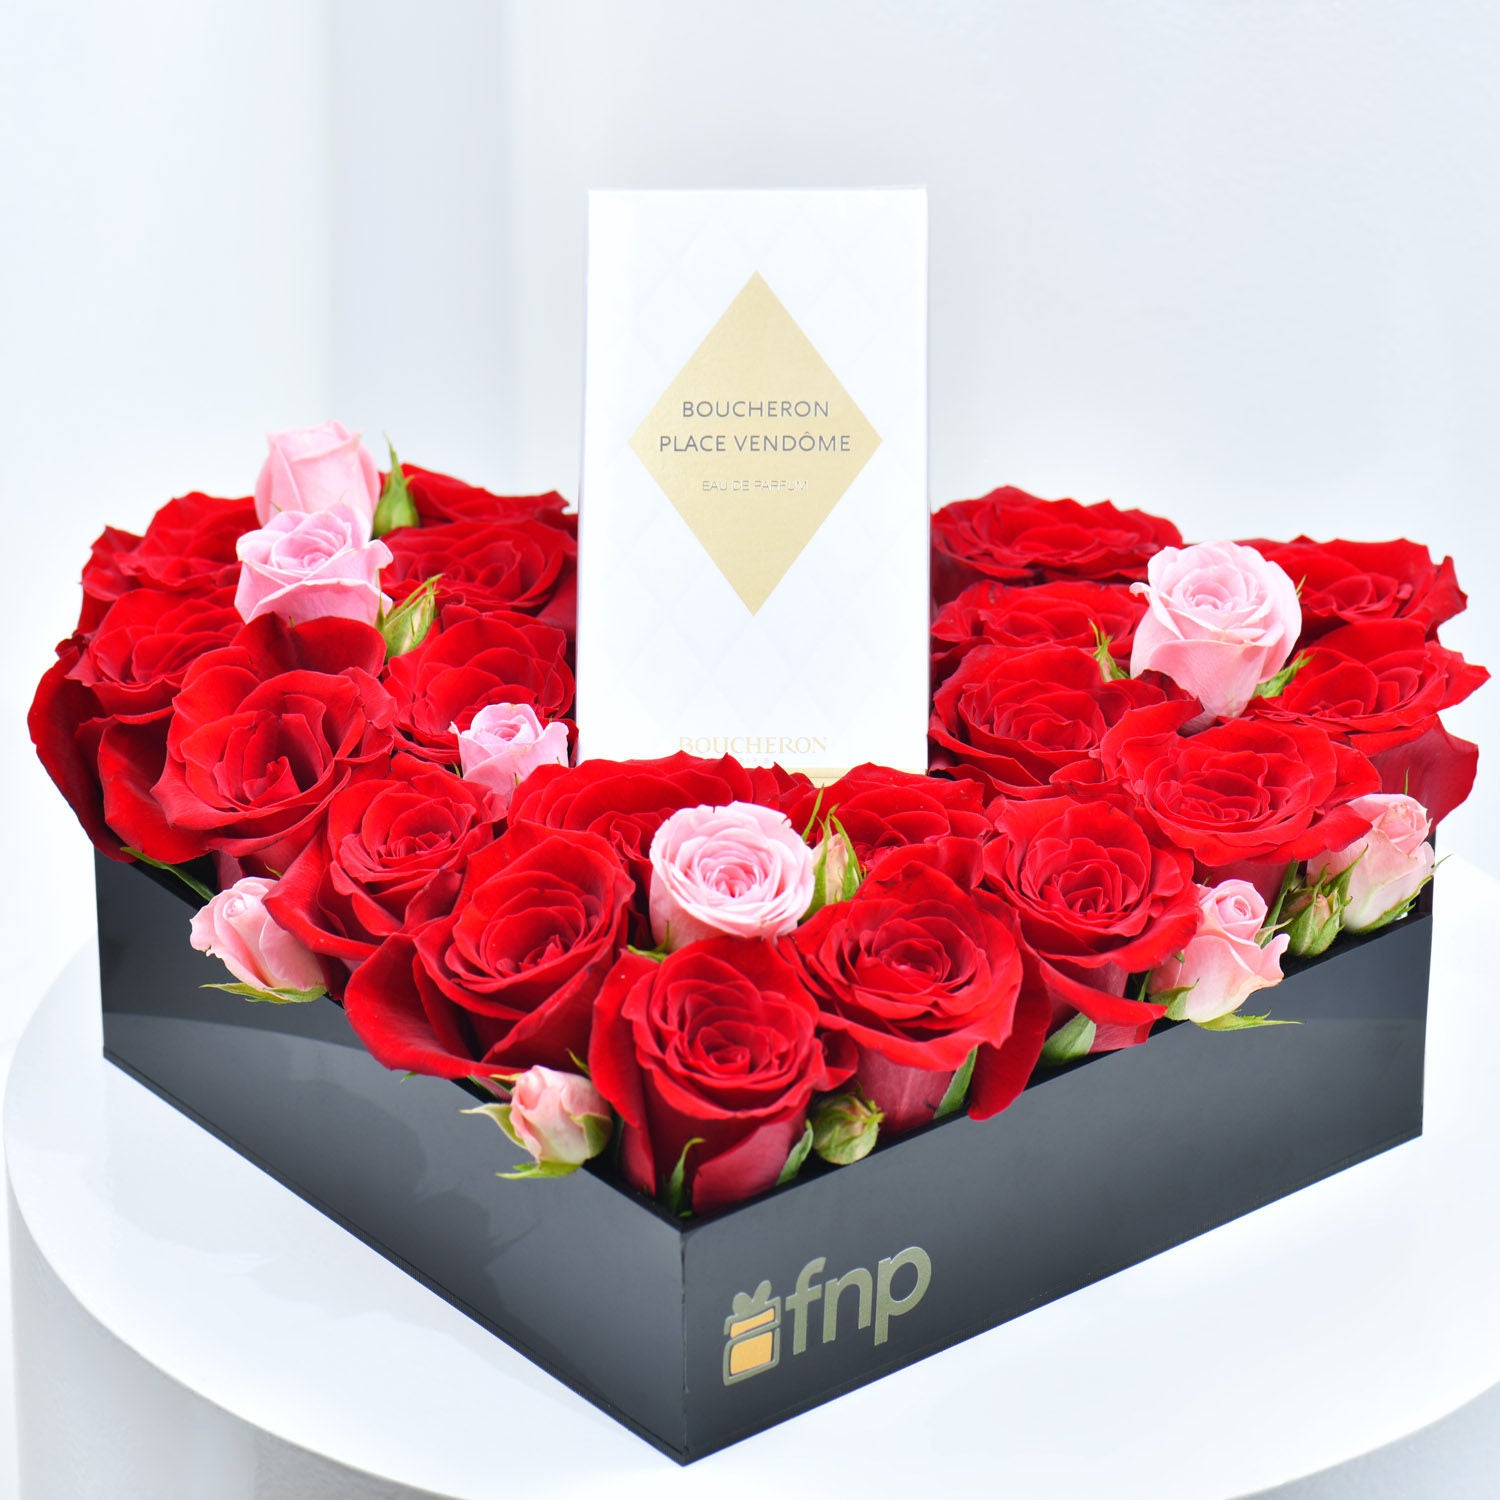 Royal Red Roses & Place Vendome Boucheron Perfume